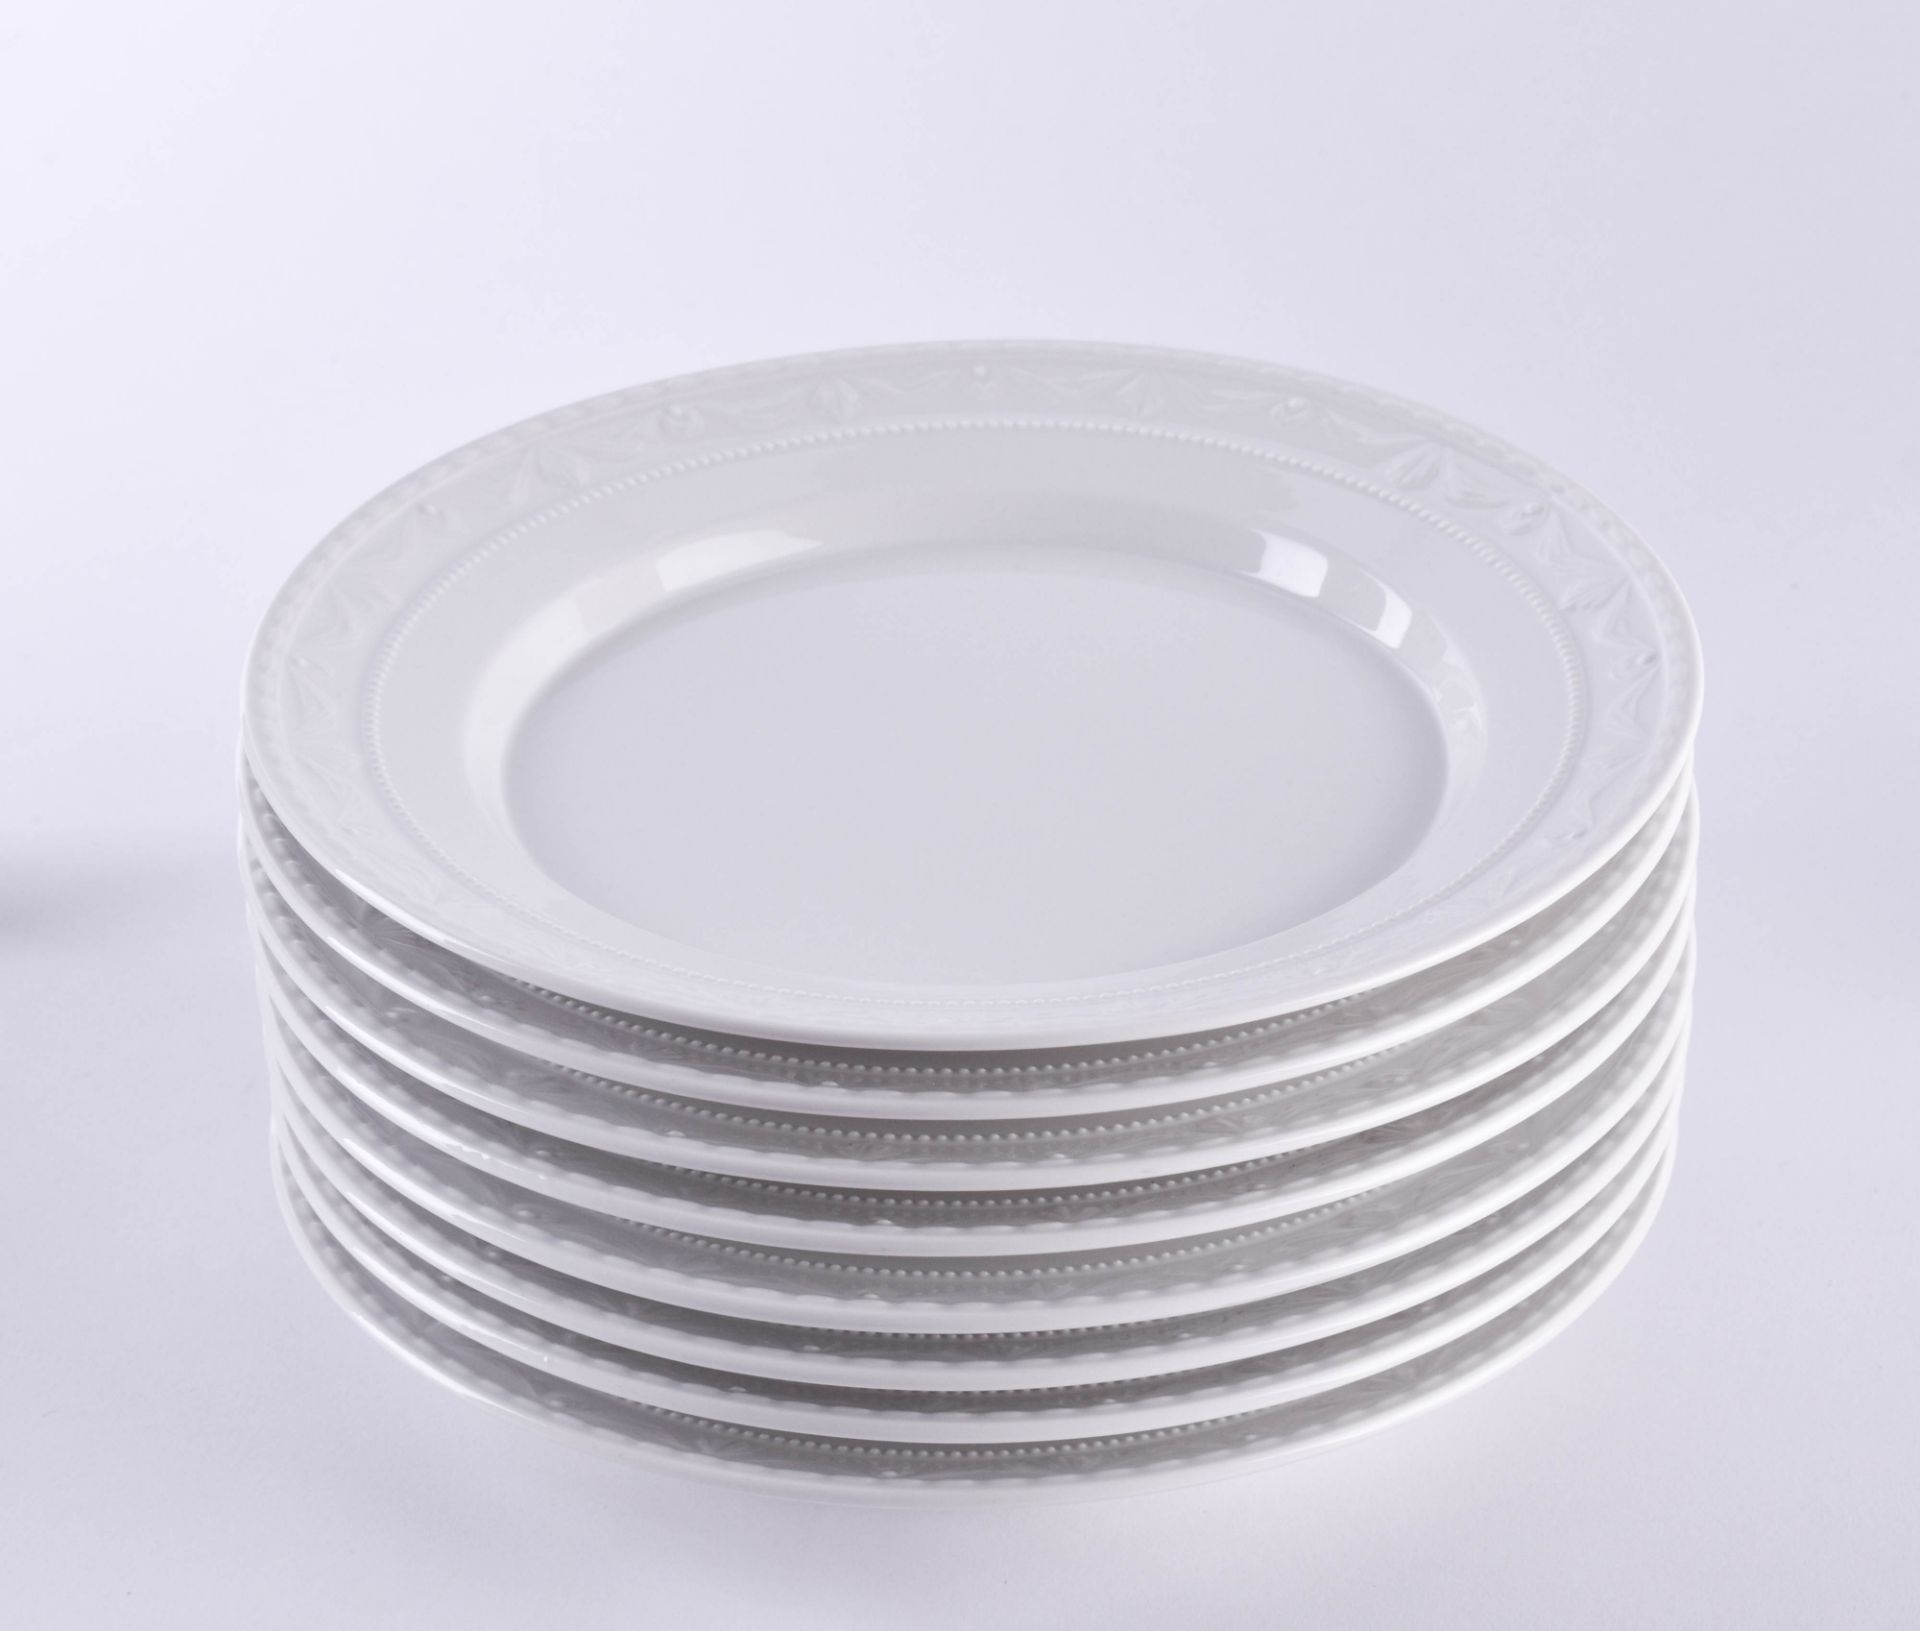 8 dinner plates KPM Kurland